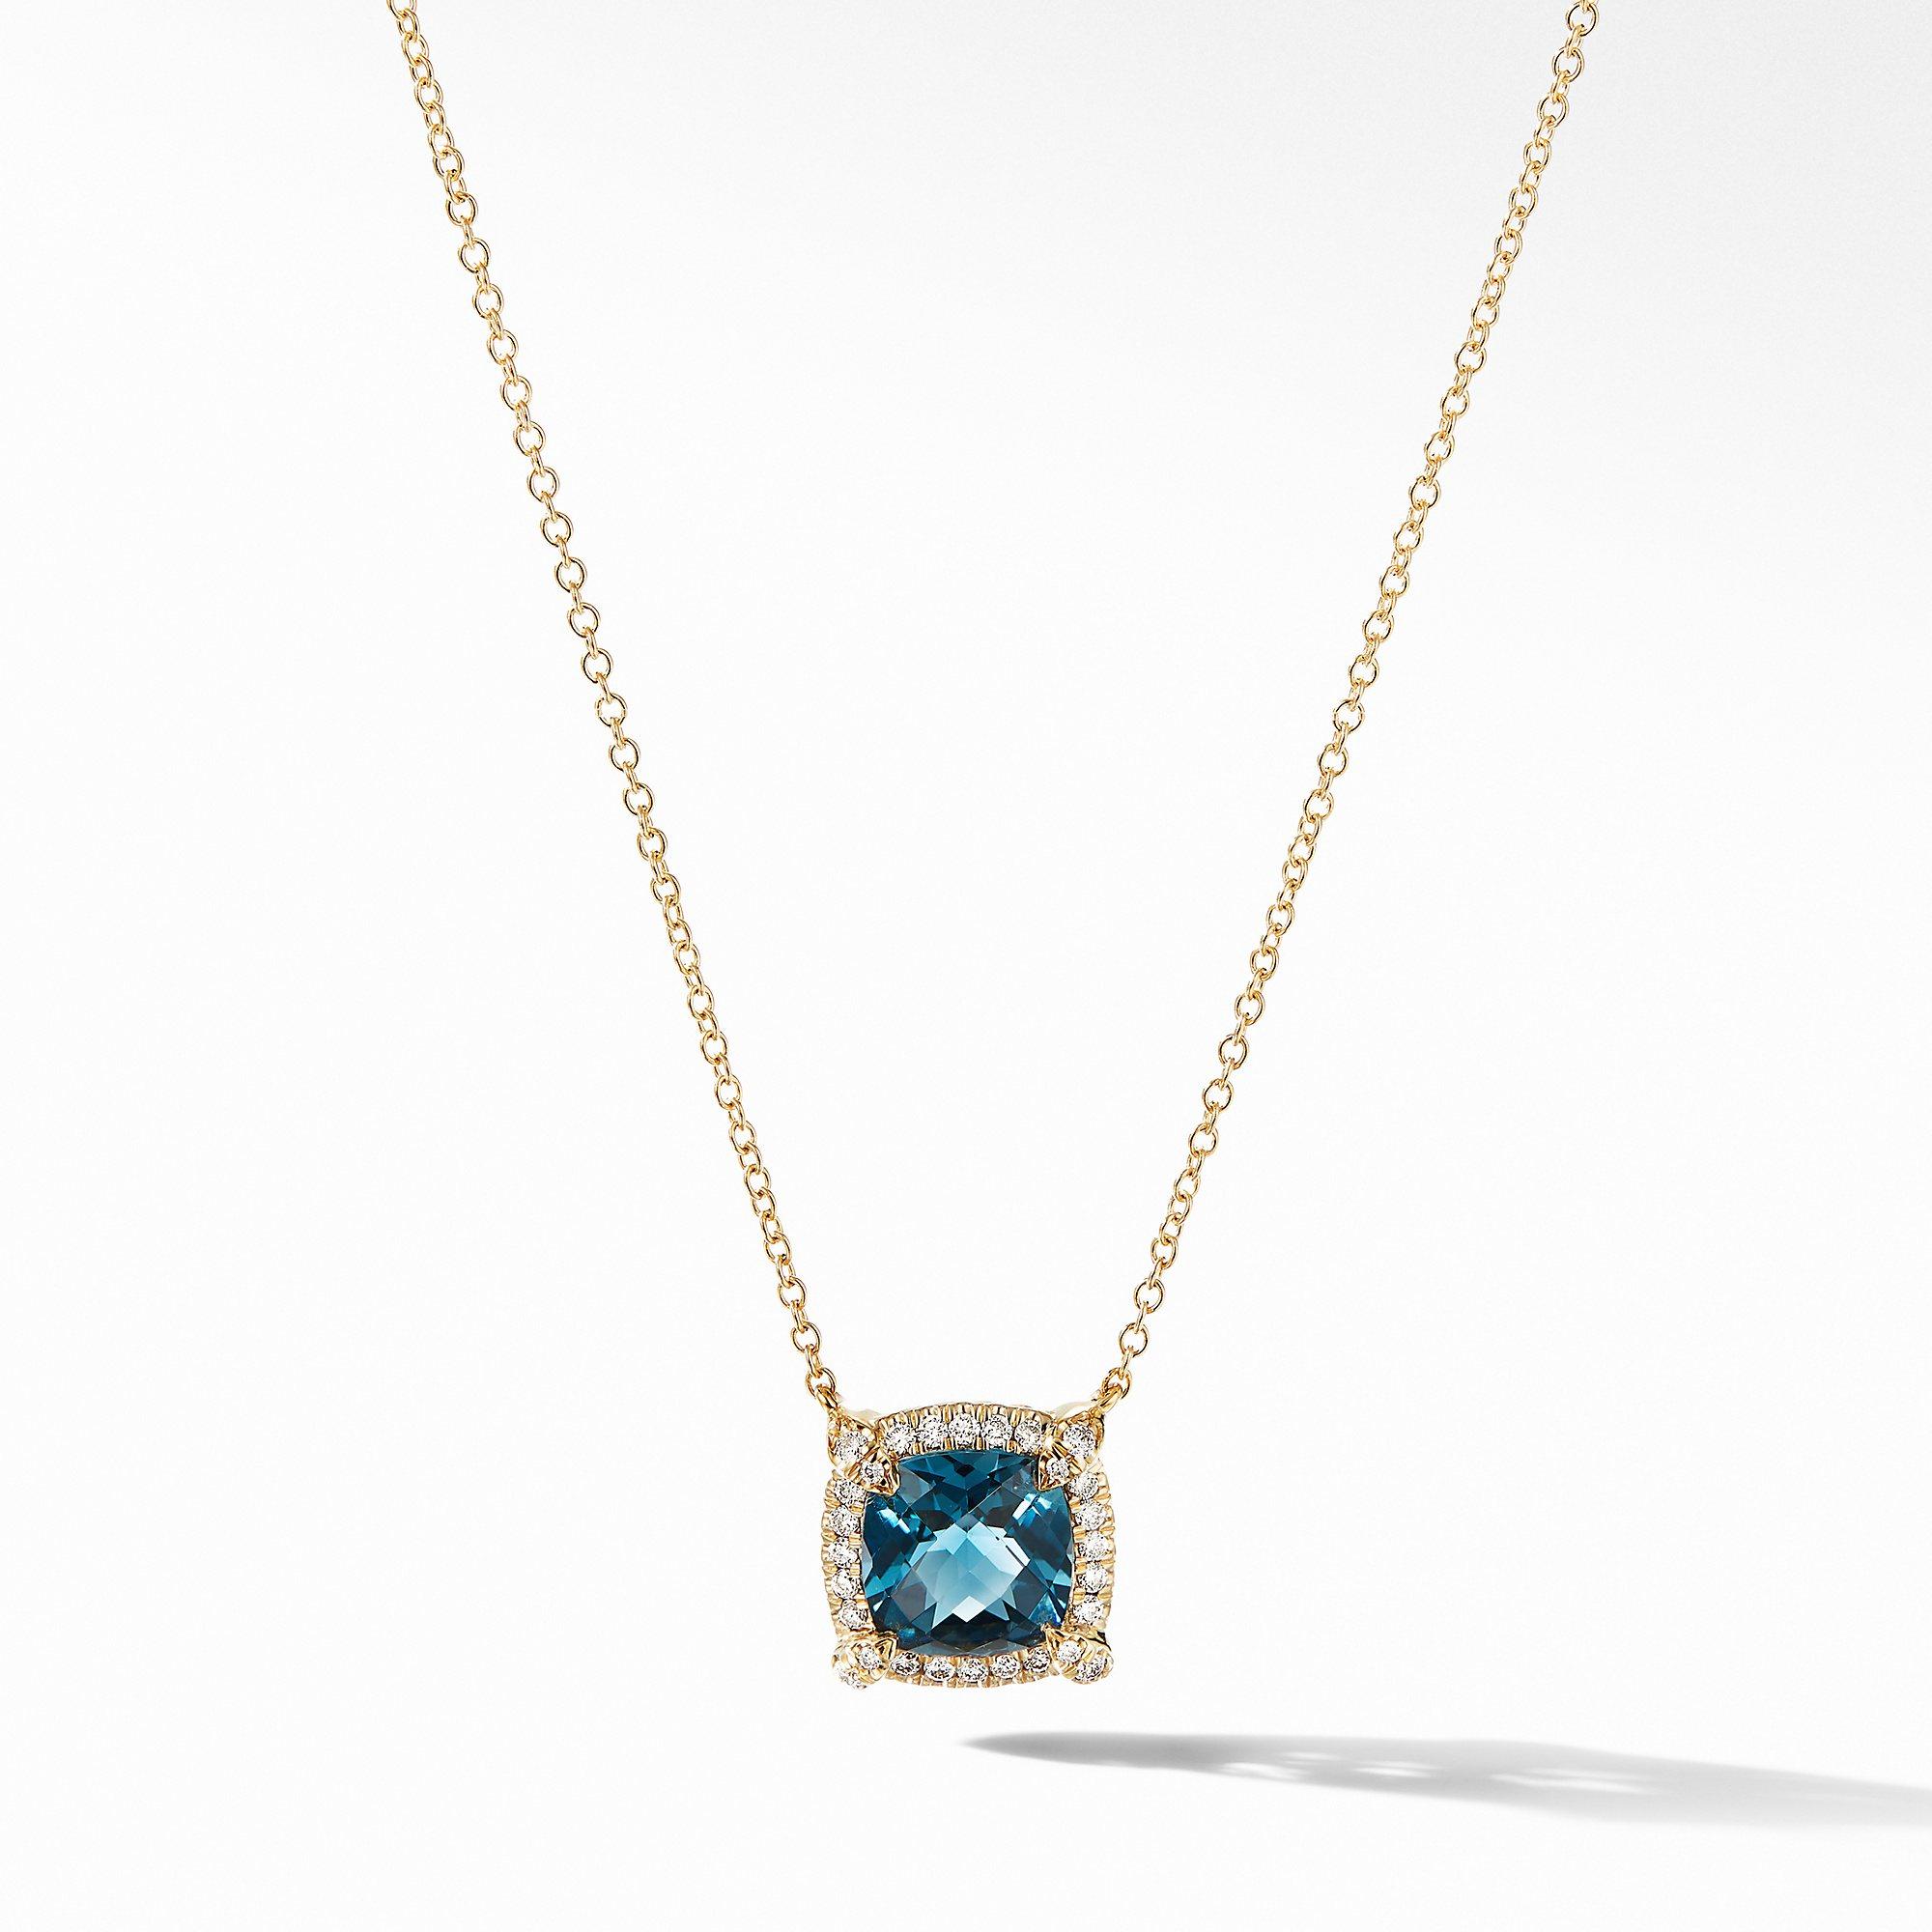 David Yurman Petite Chatelaine Pave Bezel Pendant Necklace in 18k Yellow Gold with Hampton Blue Topaz